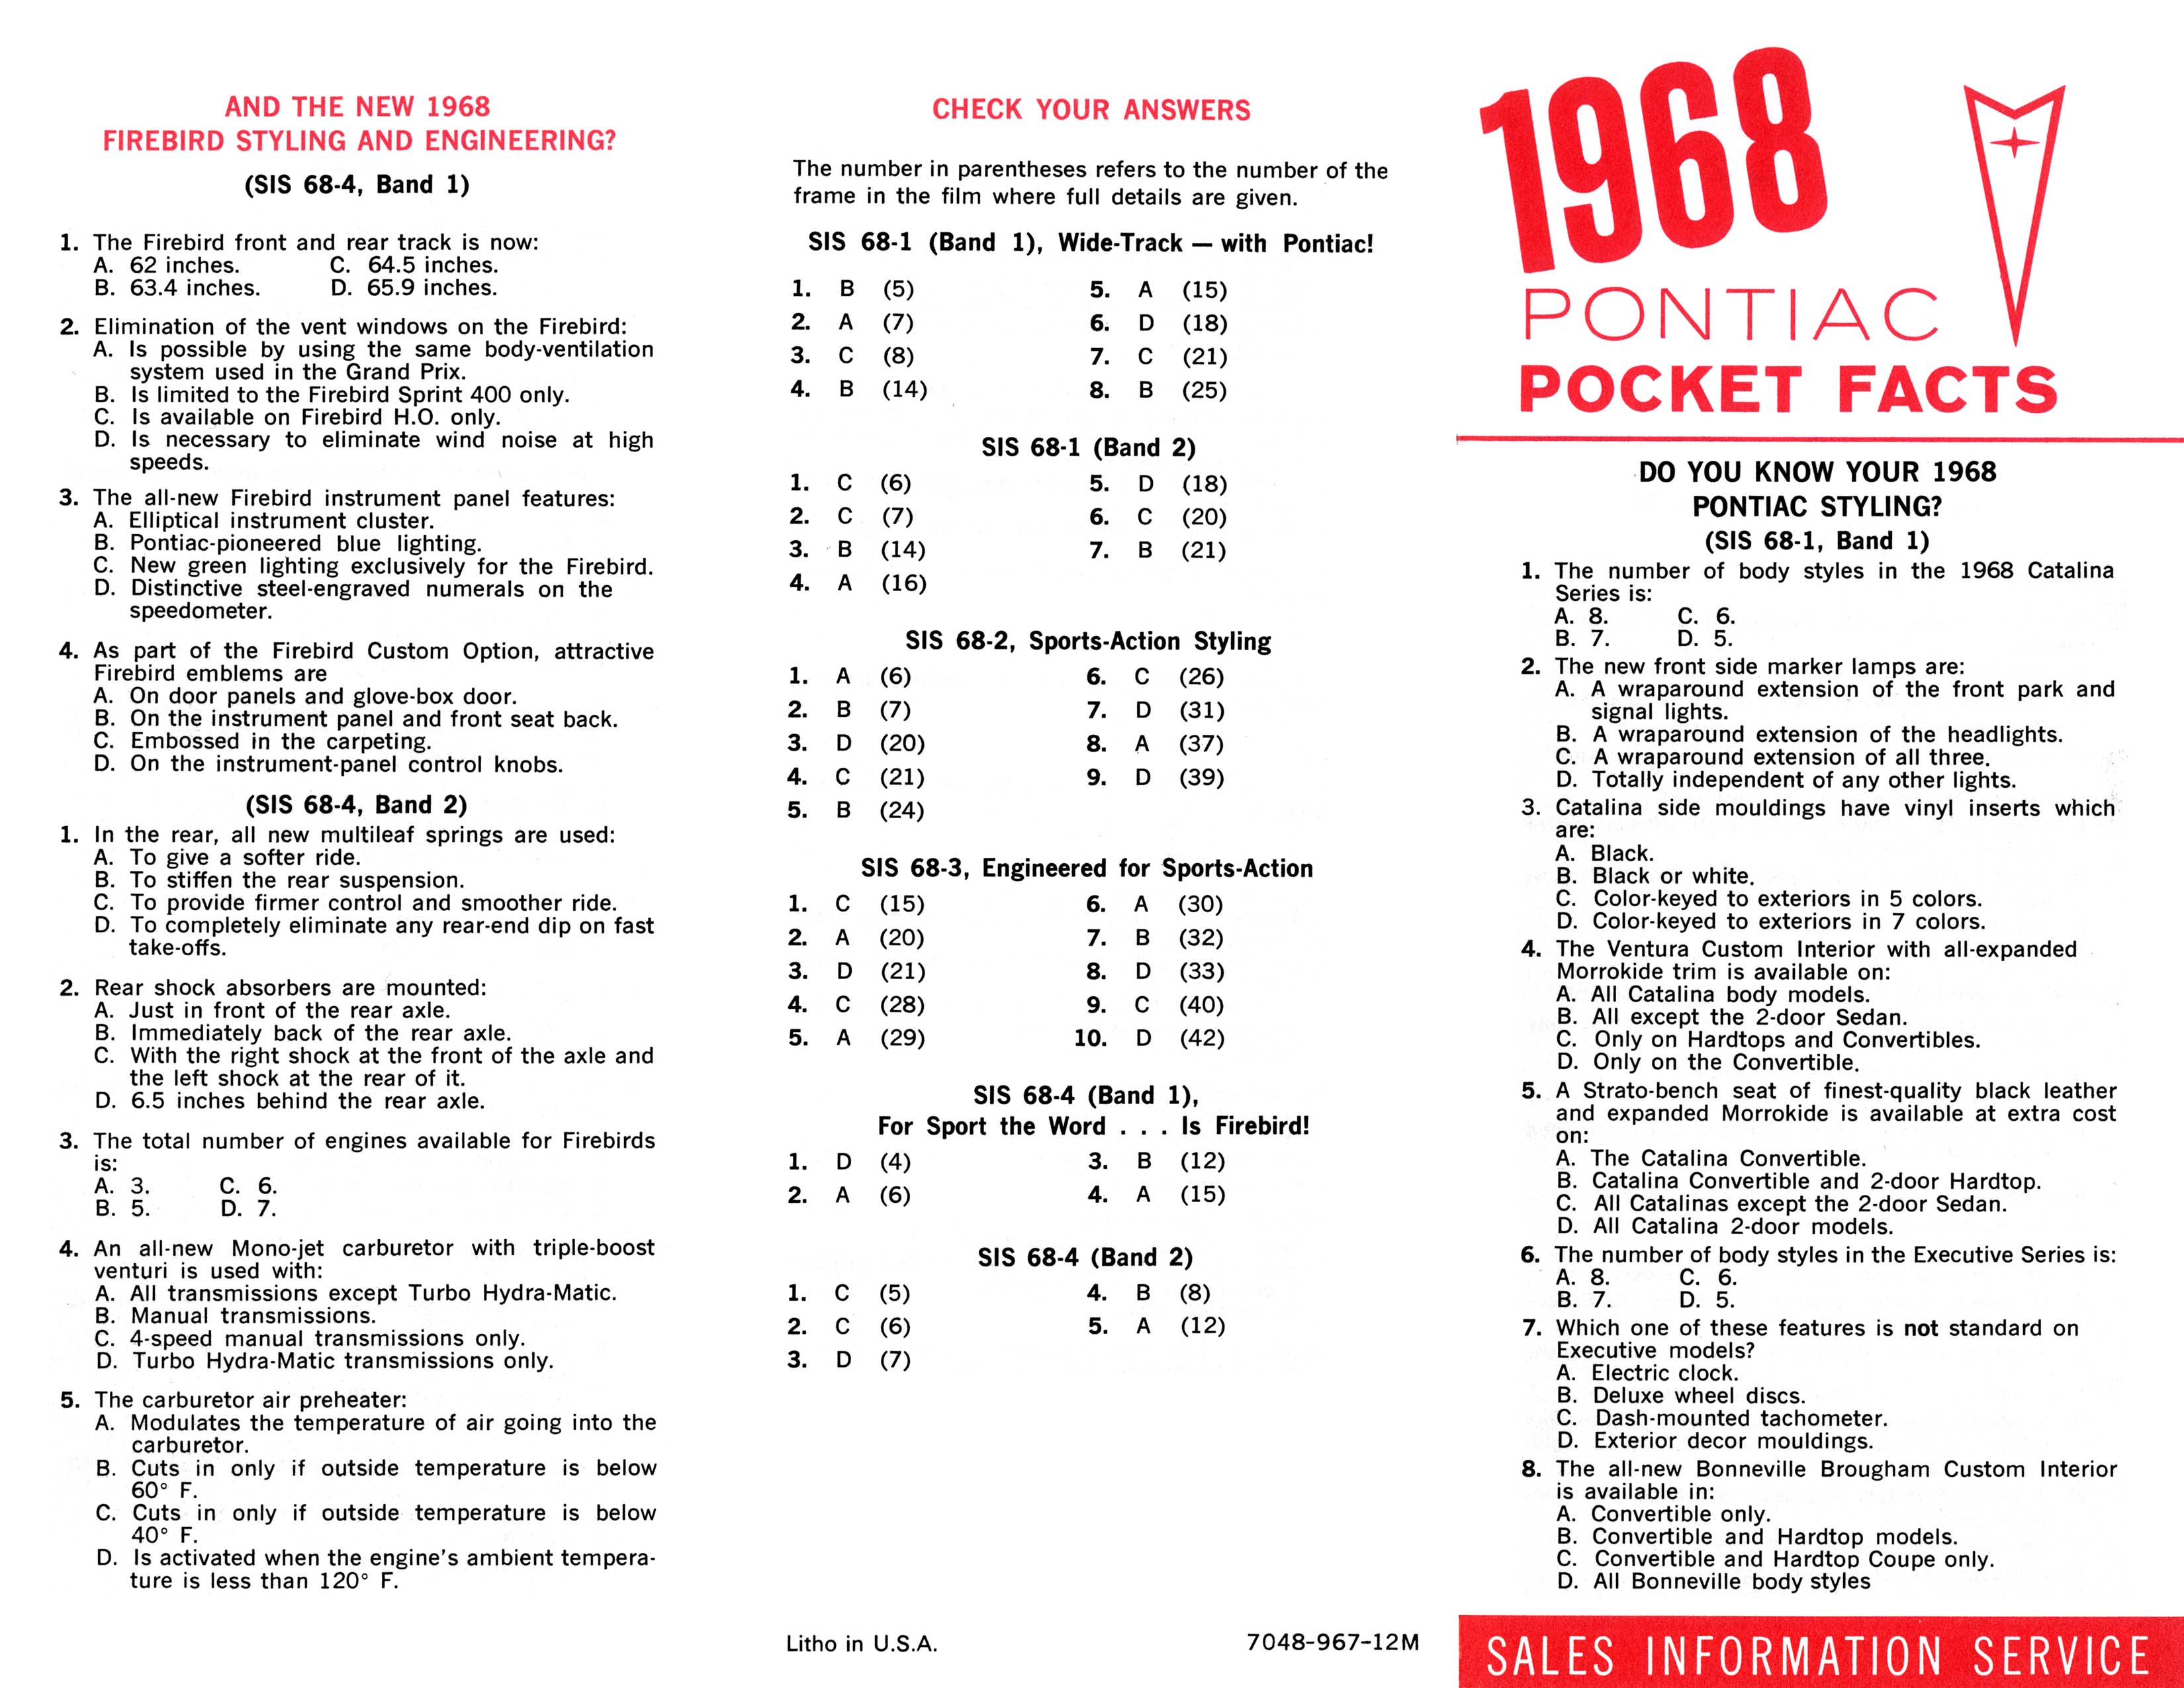 1968_Pontiac_Pocket_Facts-01